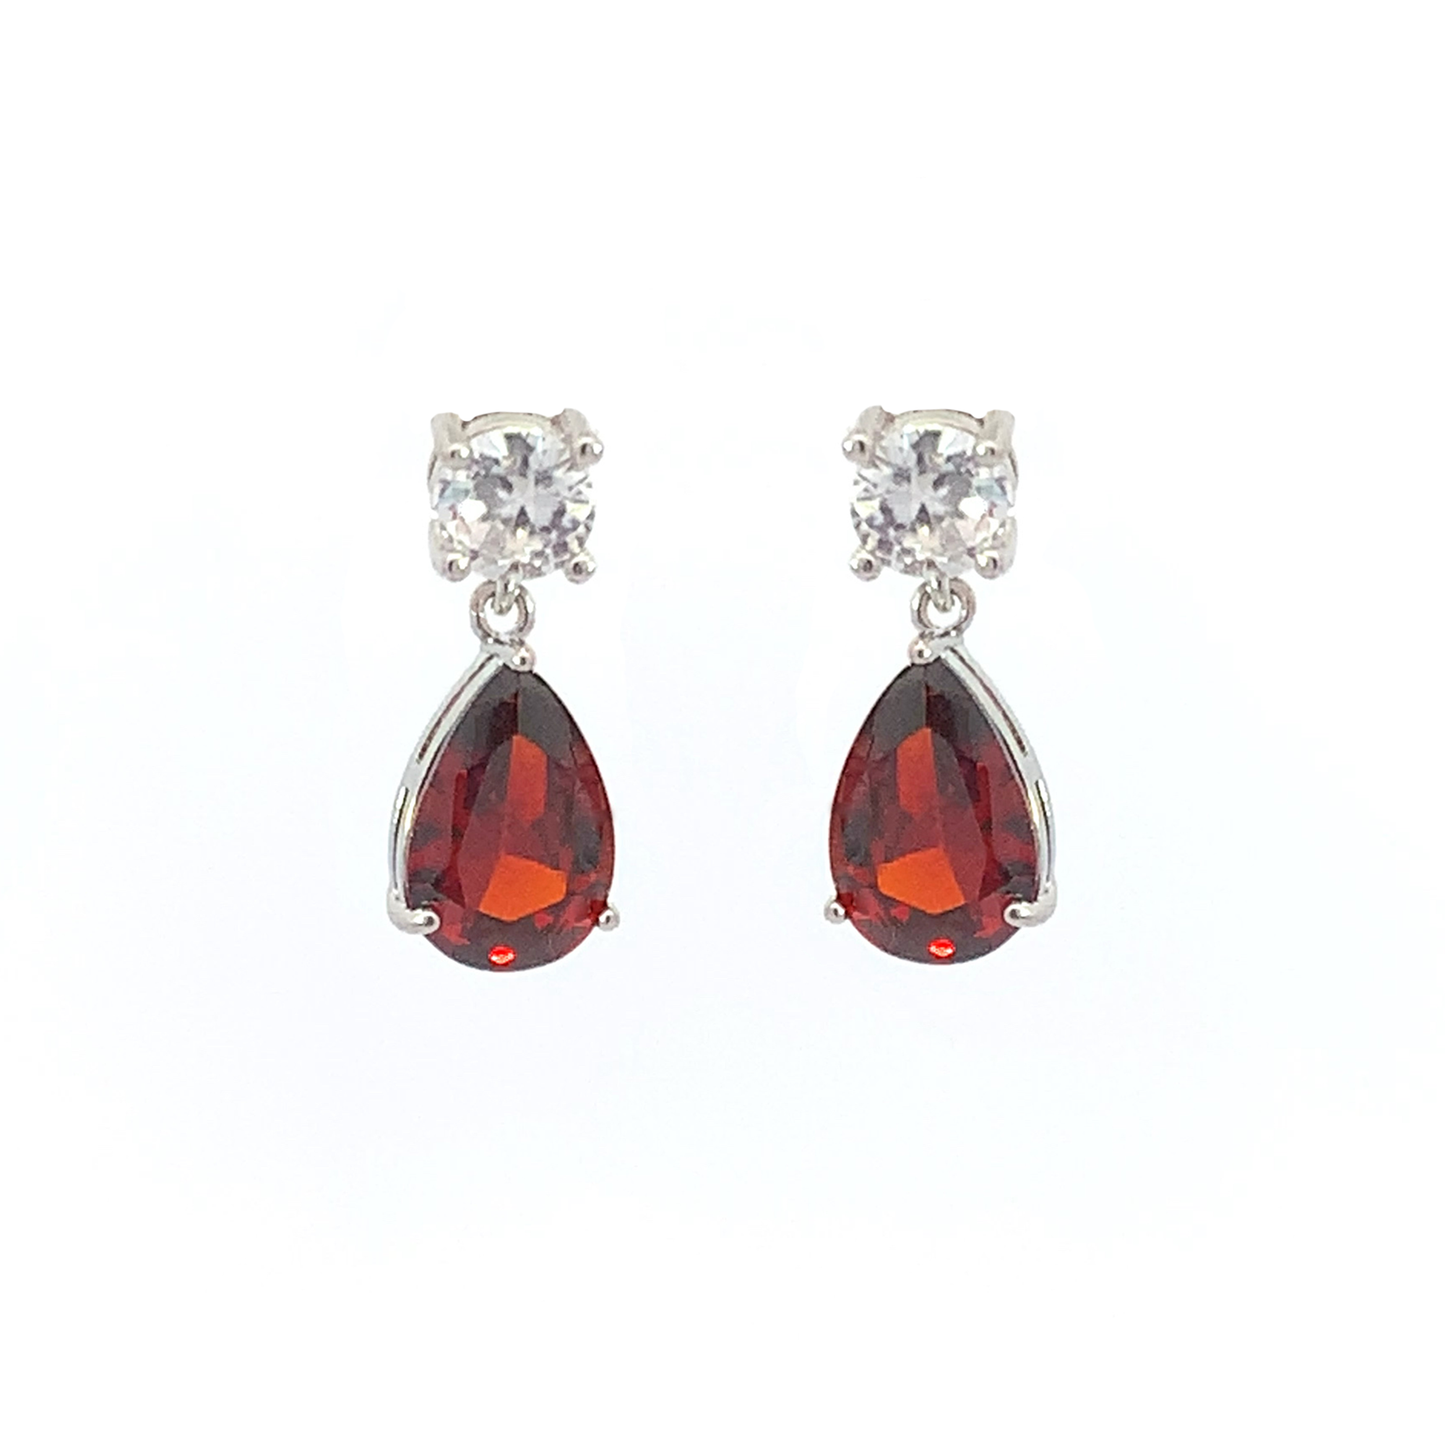 January birthstone crystal stud earrings silver